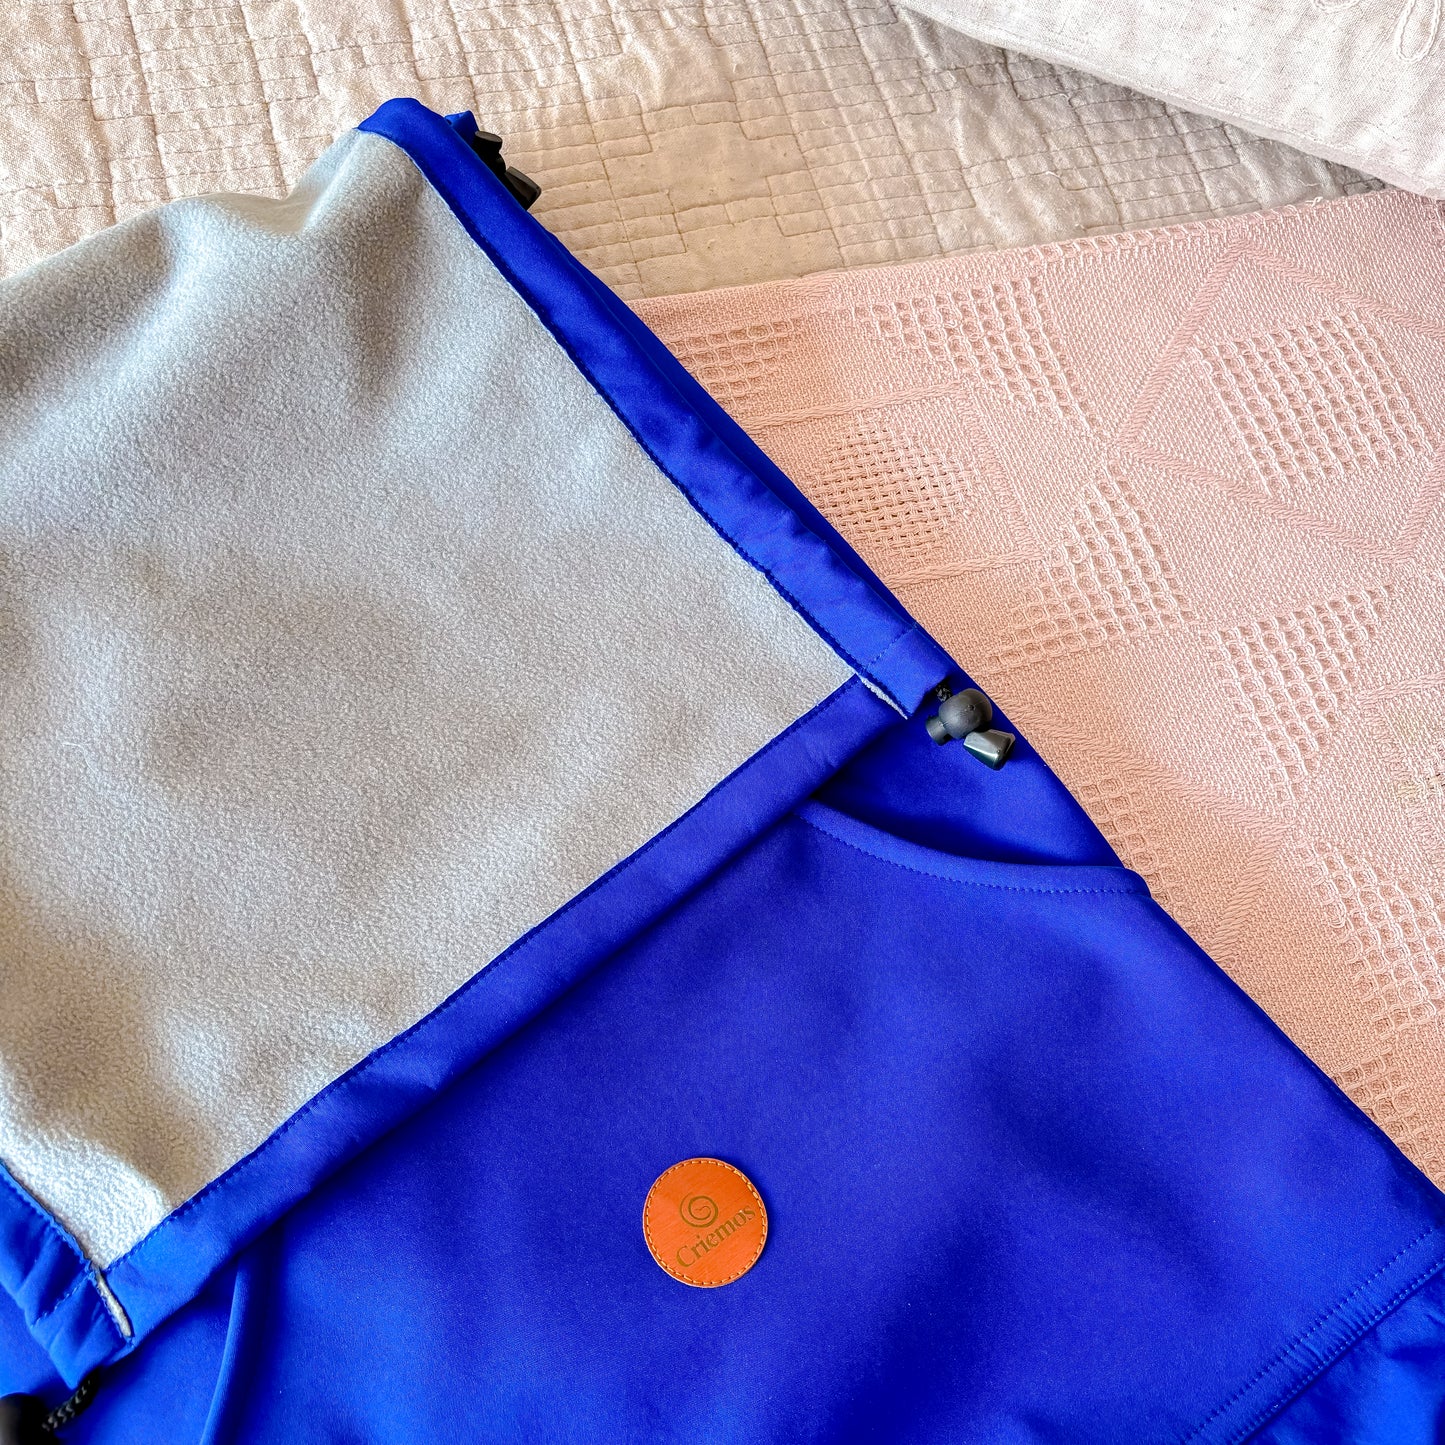 Cobertor Impermeable para Portabebés - Azul Eléctrico